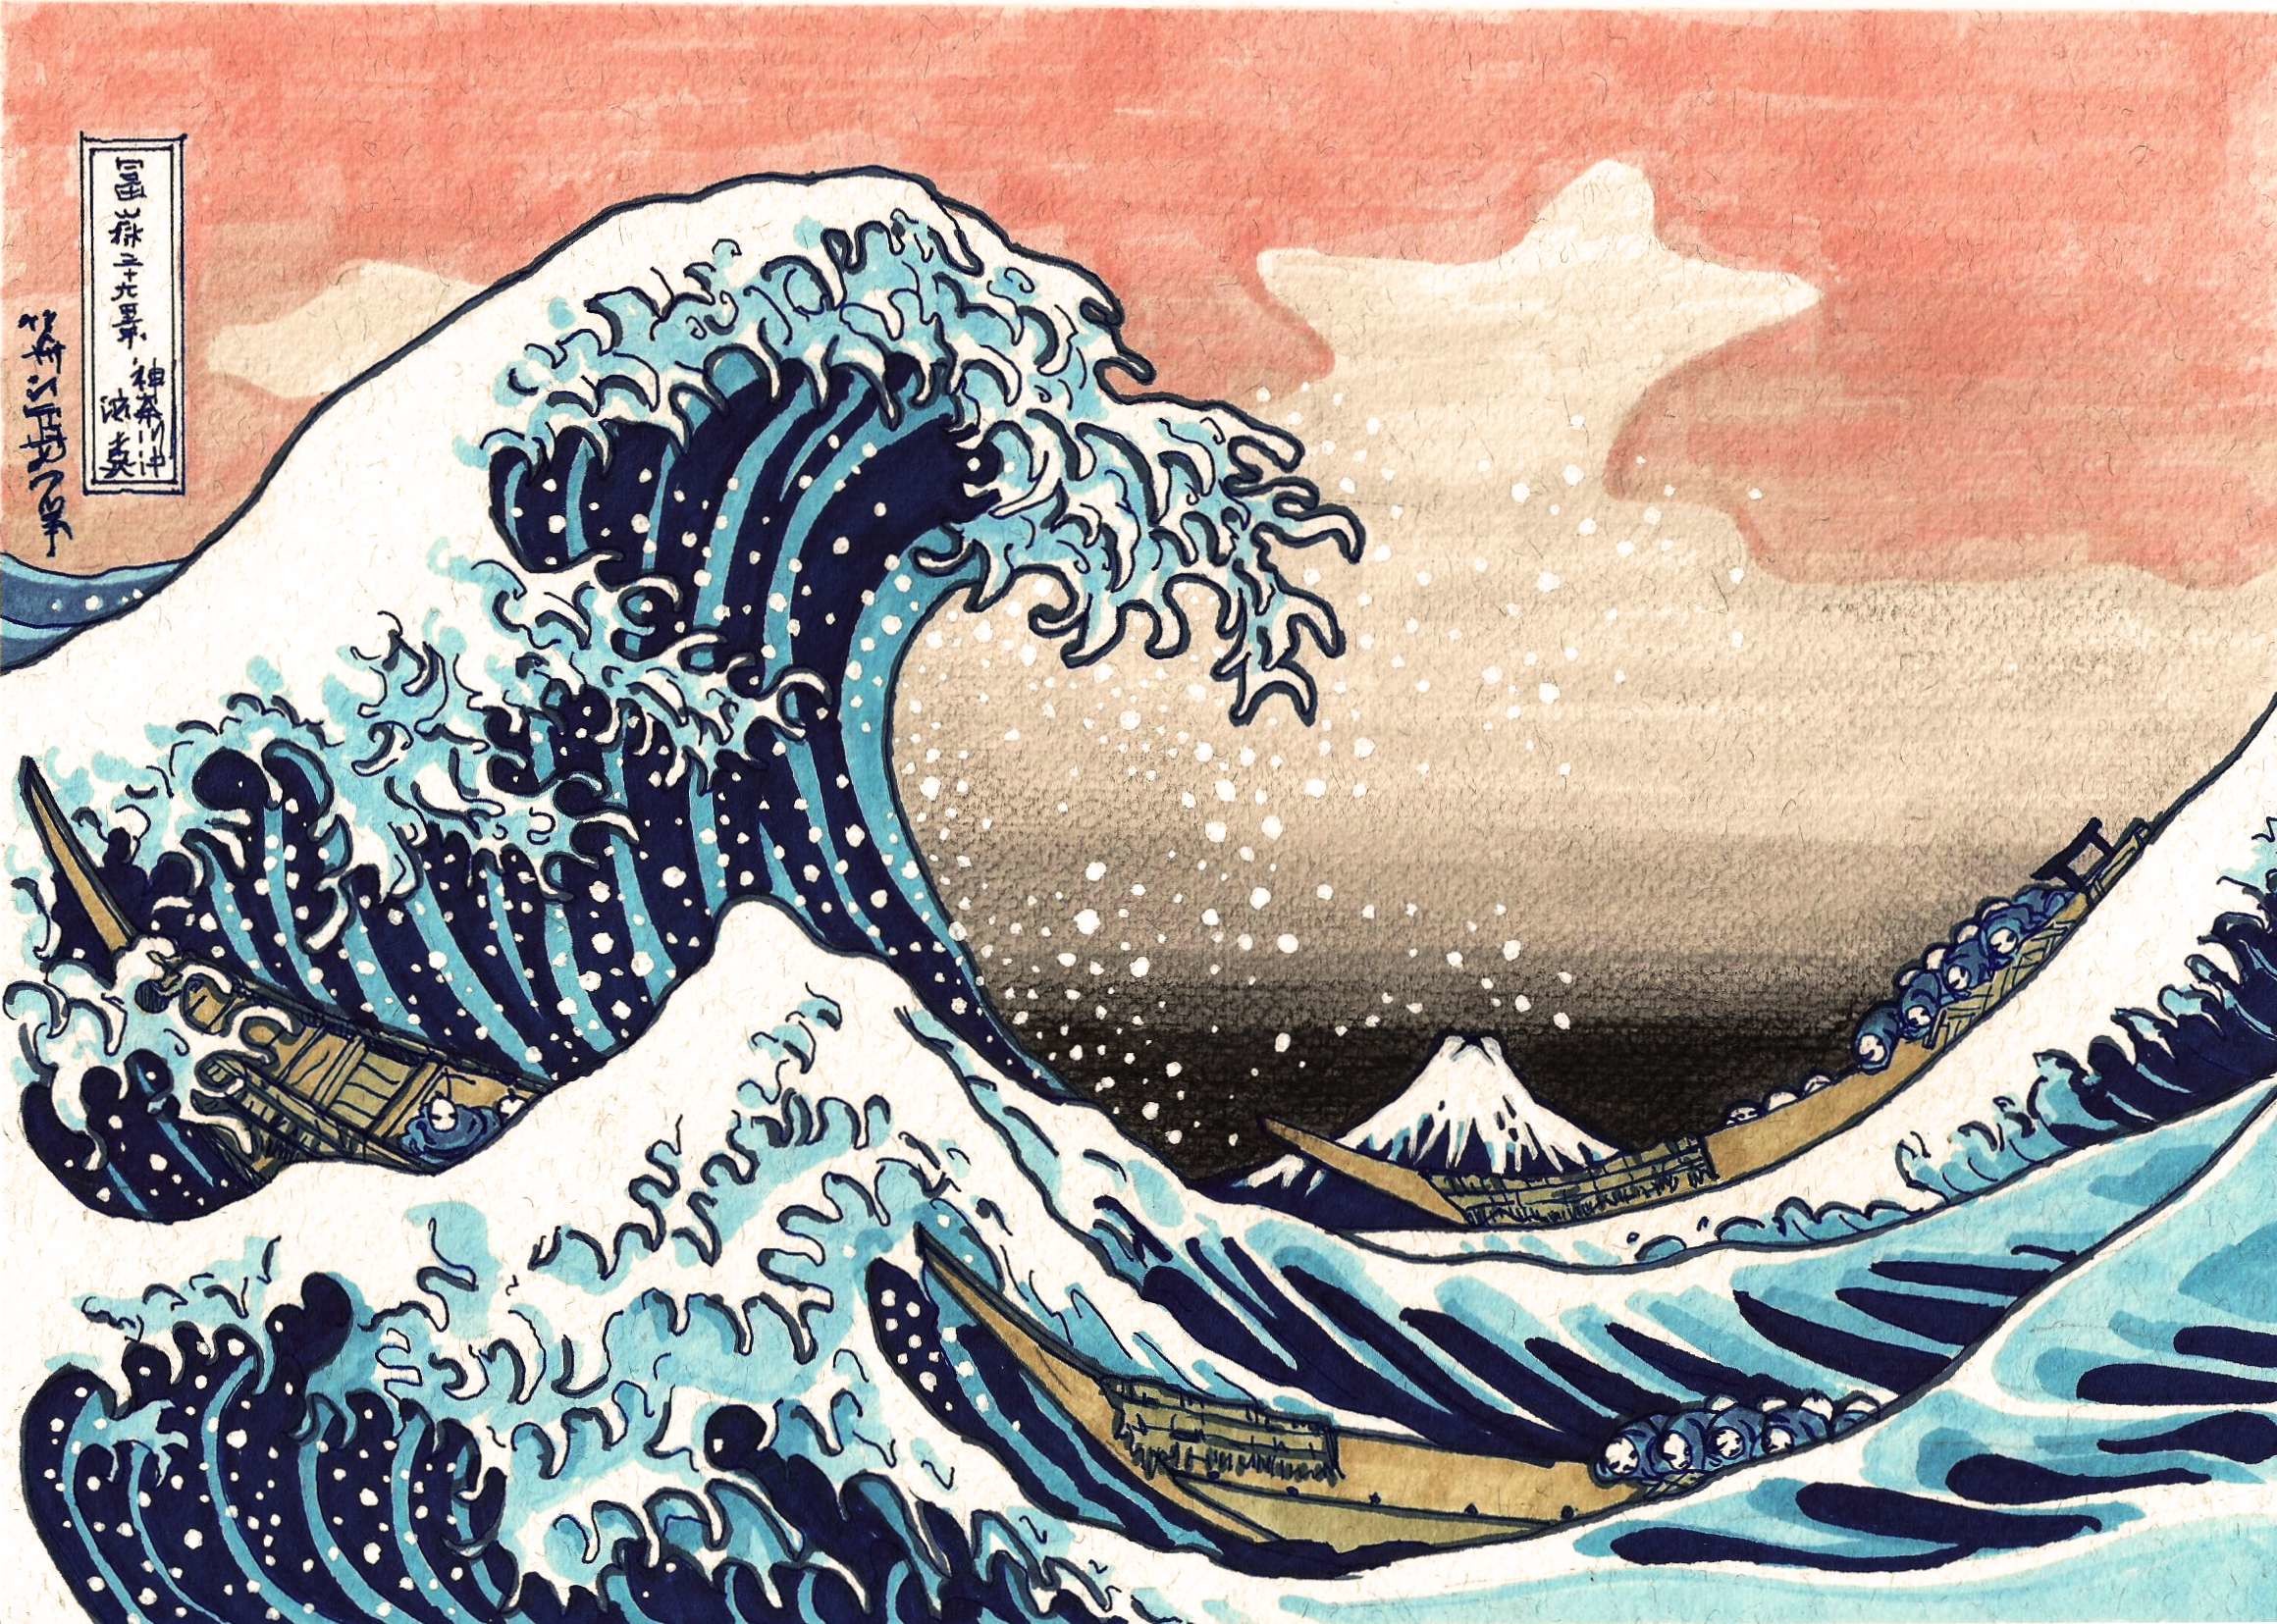 2320x1655 The Great Wave Off Kanagawa by crislink on DeviantArt